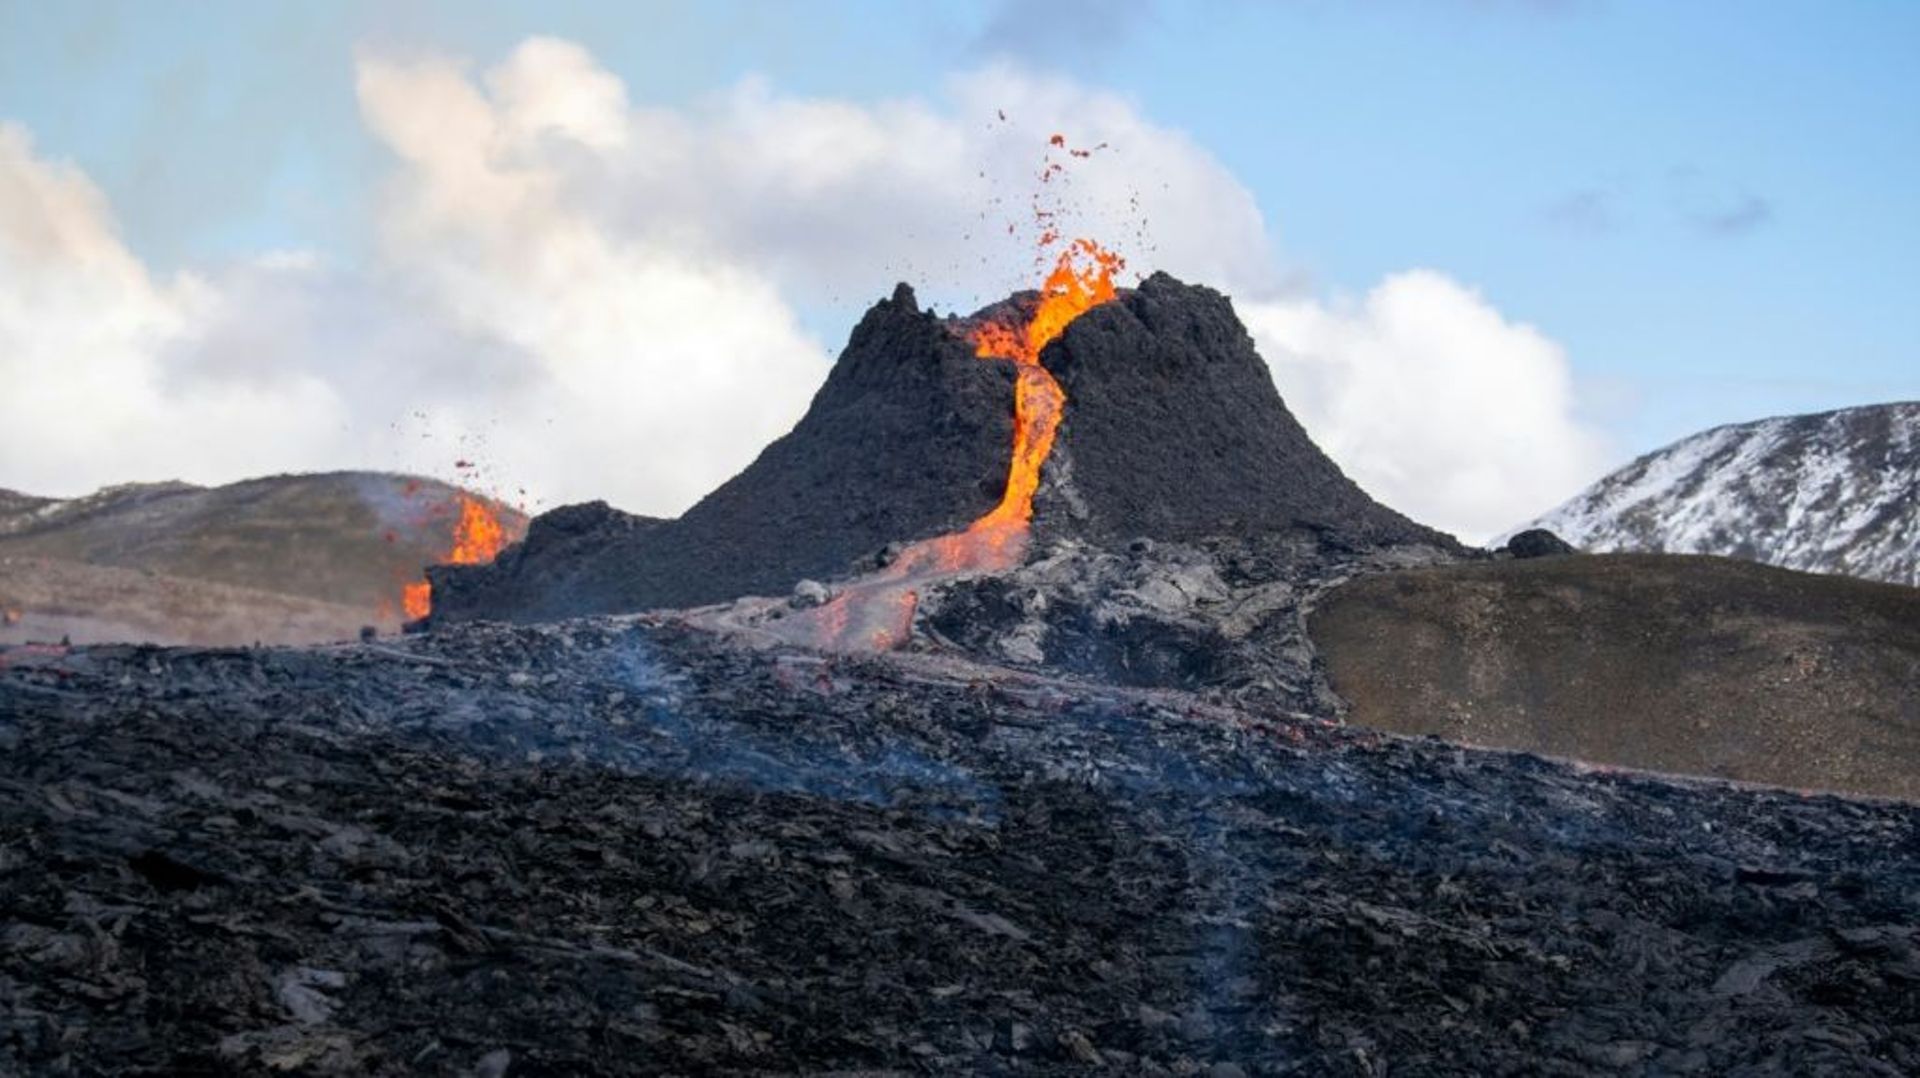 Le volcan Fagradalsfjall en éruption, à 40 km de Reykjavik, le 23 mars 2021 en Islande